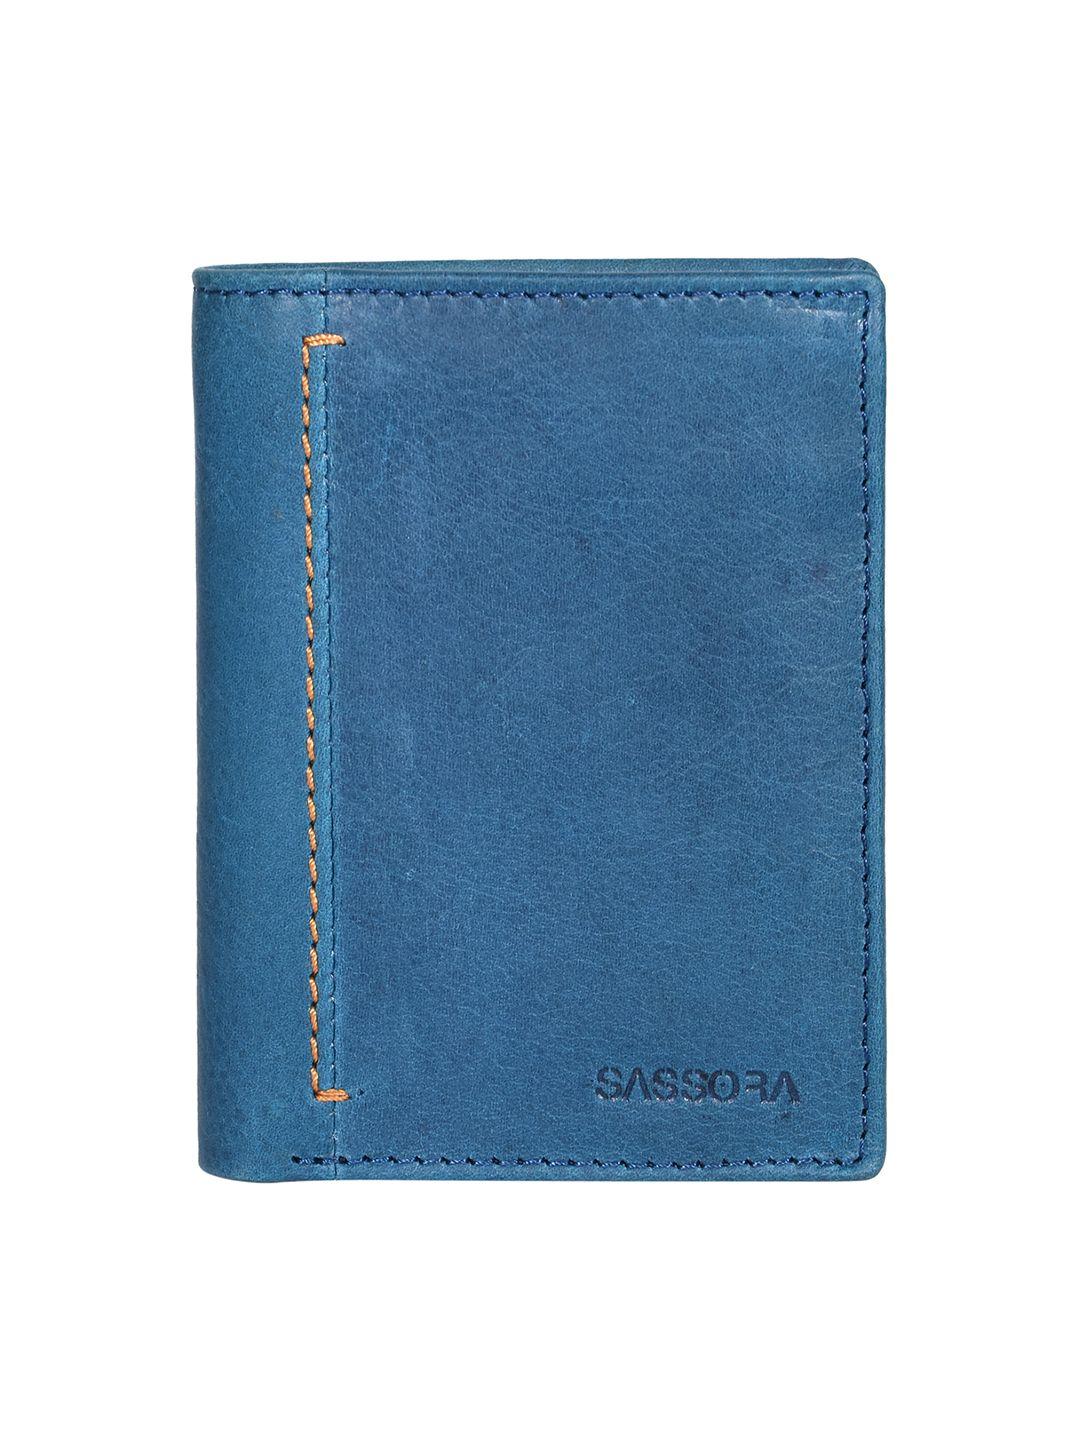 sassora unisex leather two fold bi-fold rfid wallet